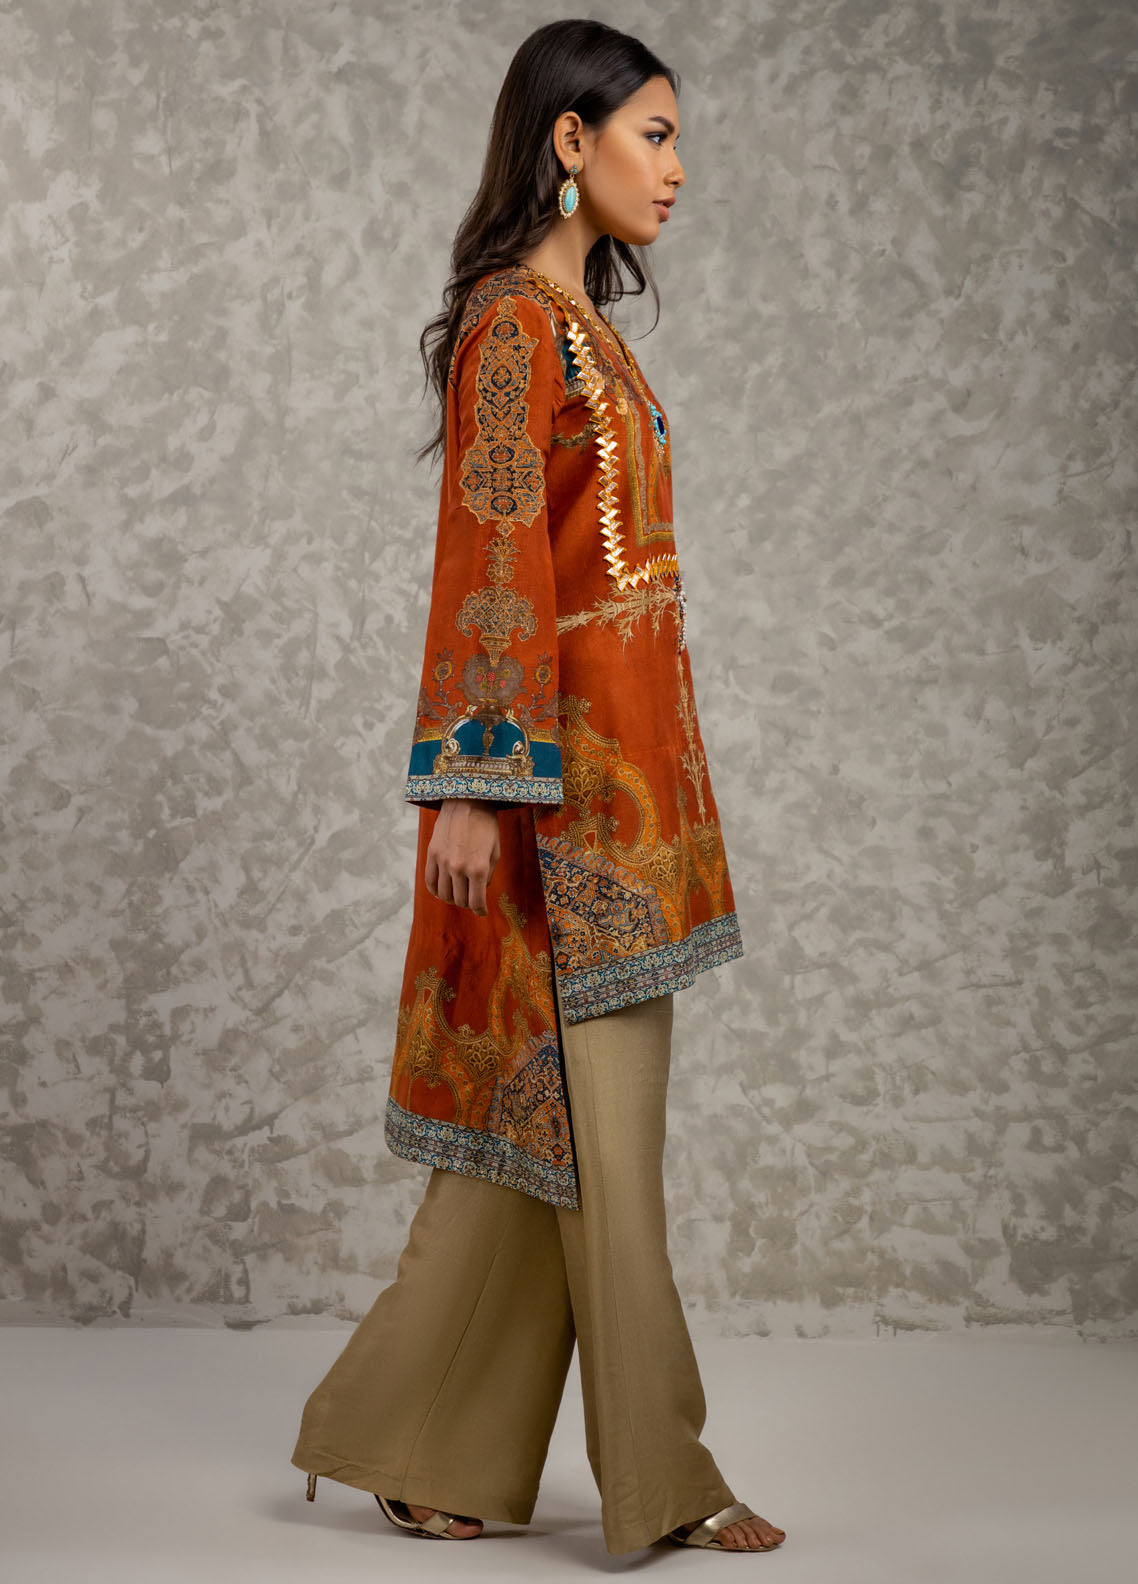 Shamaeel Ansari Luxury Pret Embroidered Silk Shirt AM-04